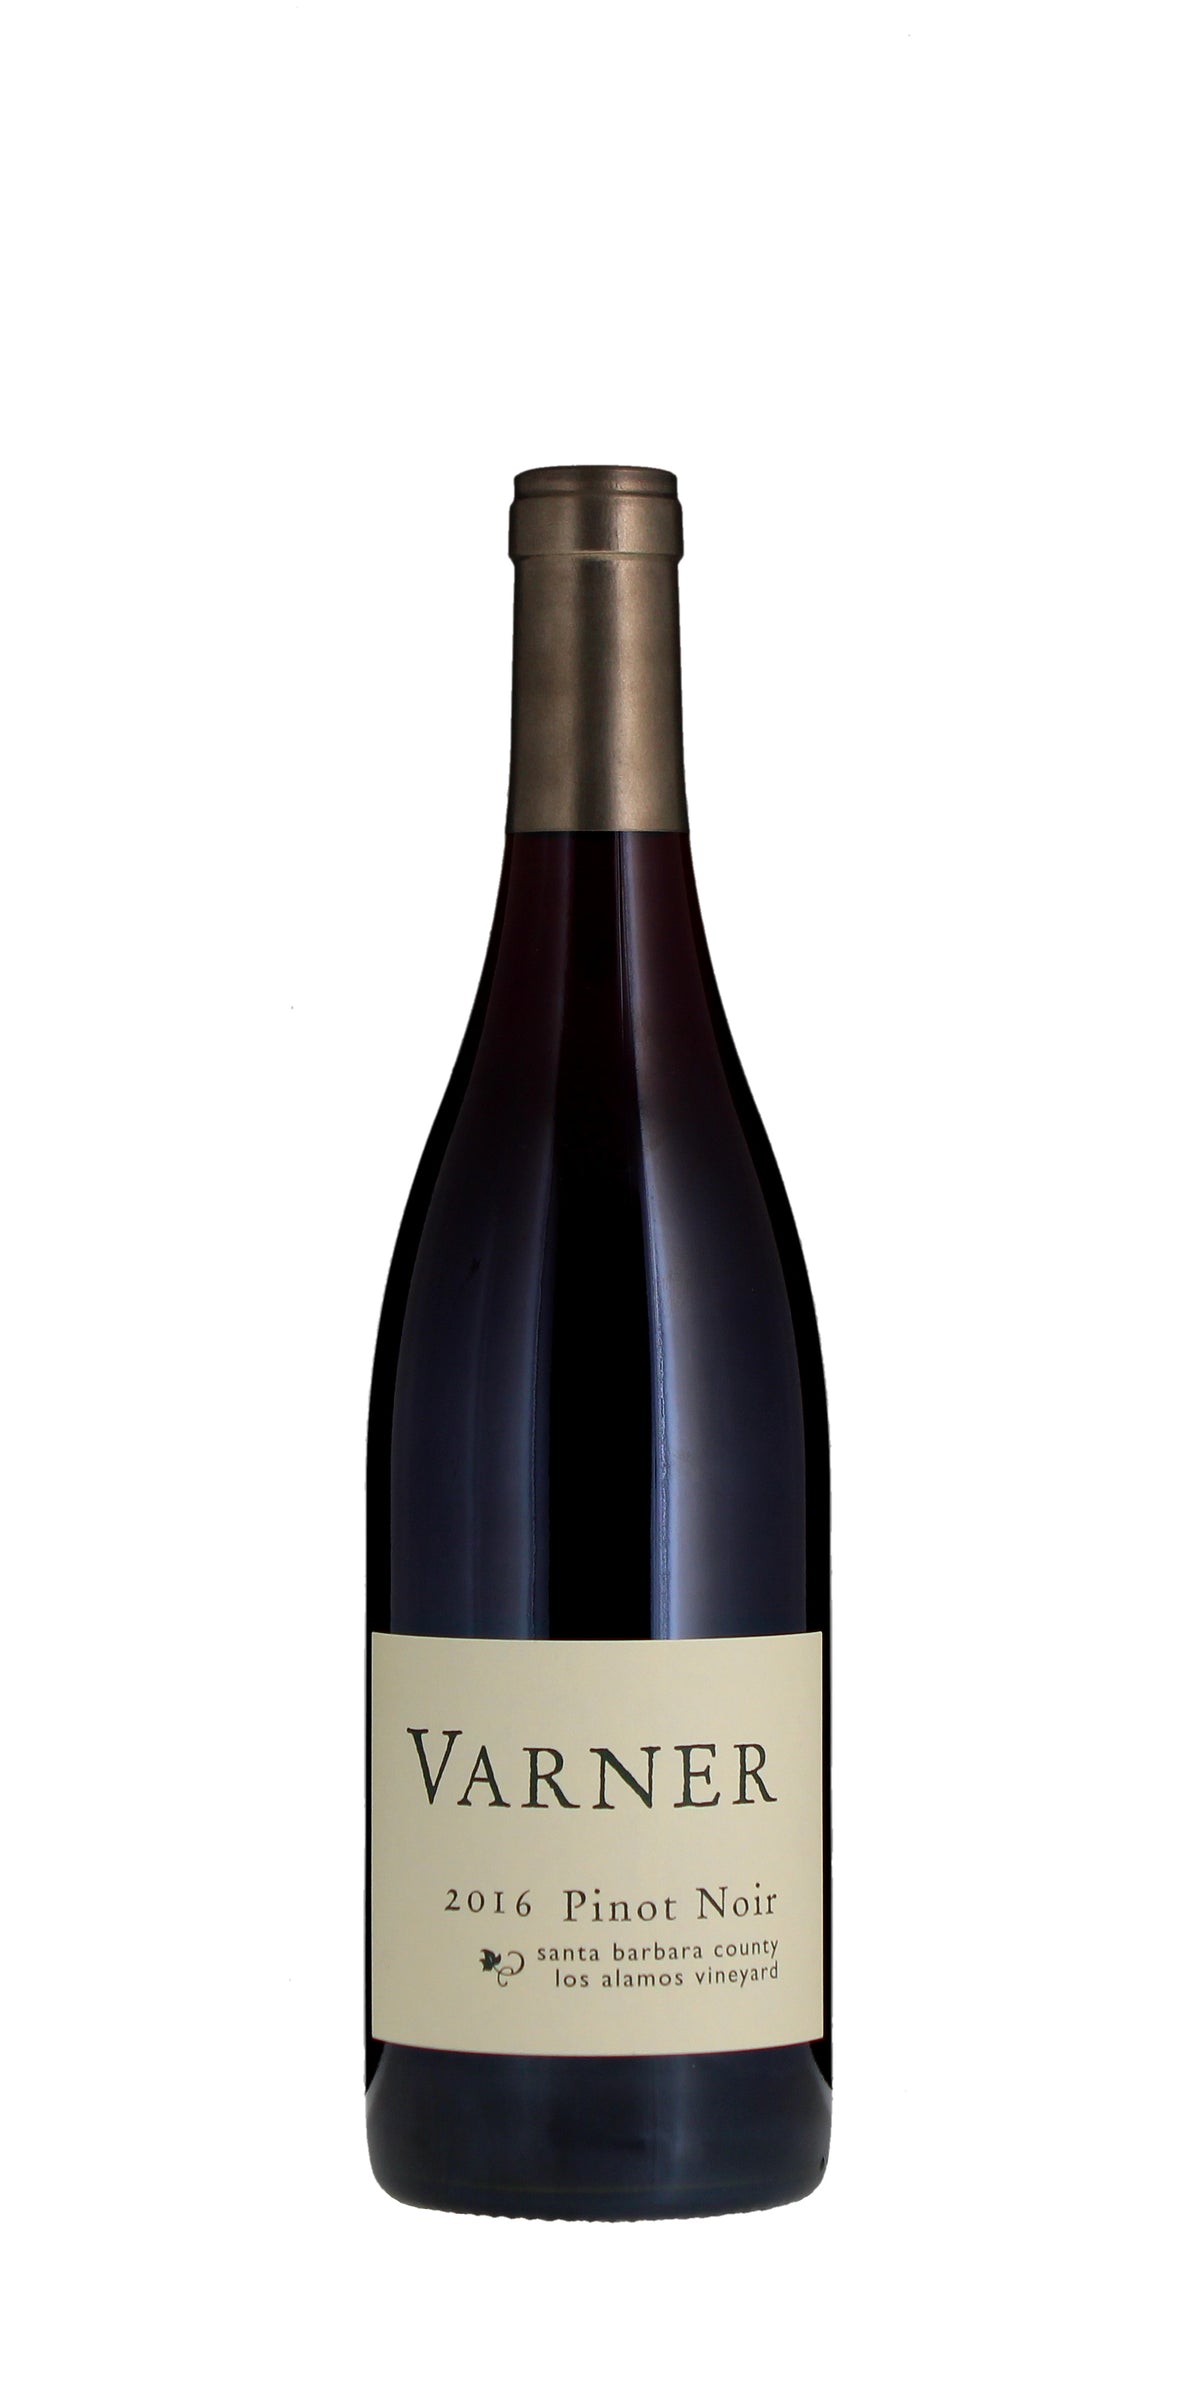 Varner, Pinot Noir, Santa Barbara County, Los Alamos Vineyard, 2016